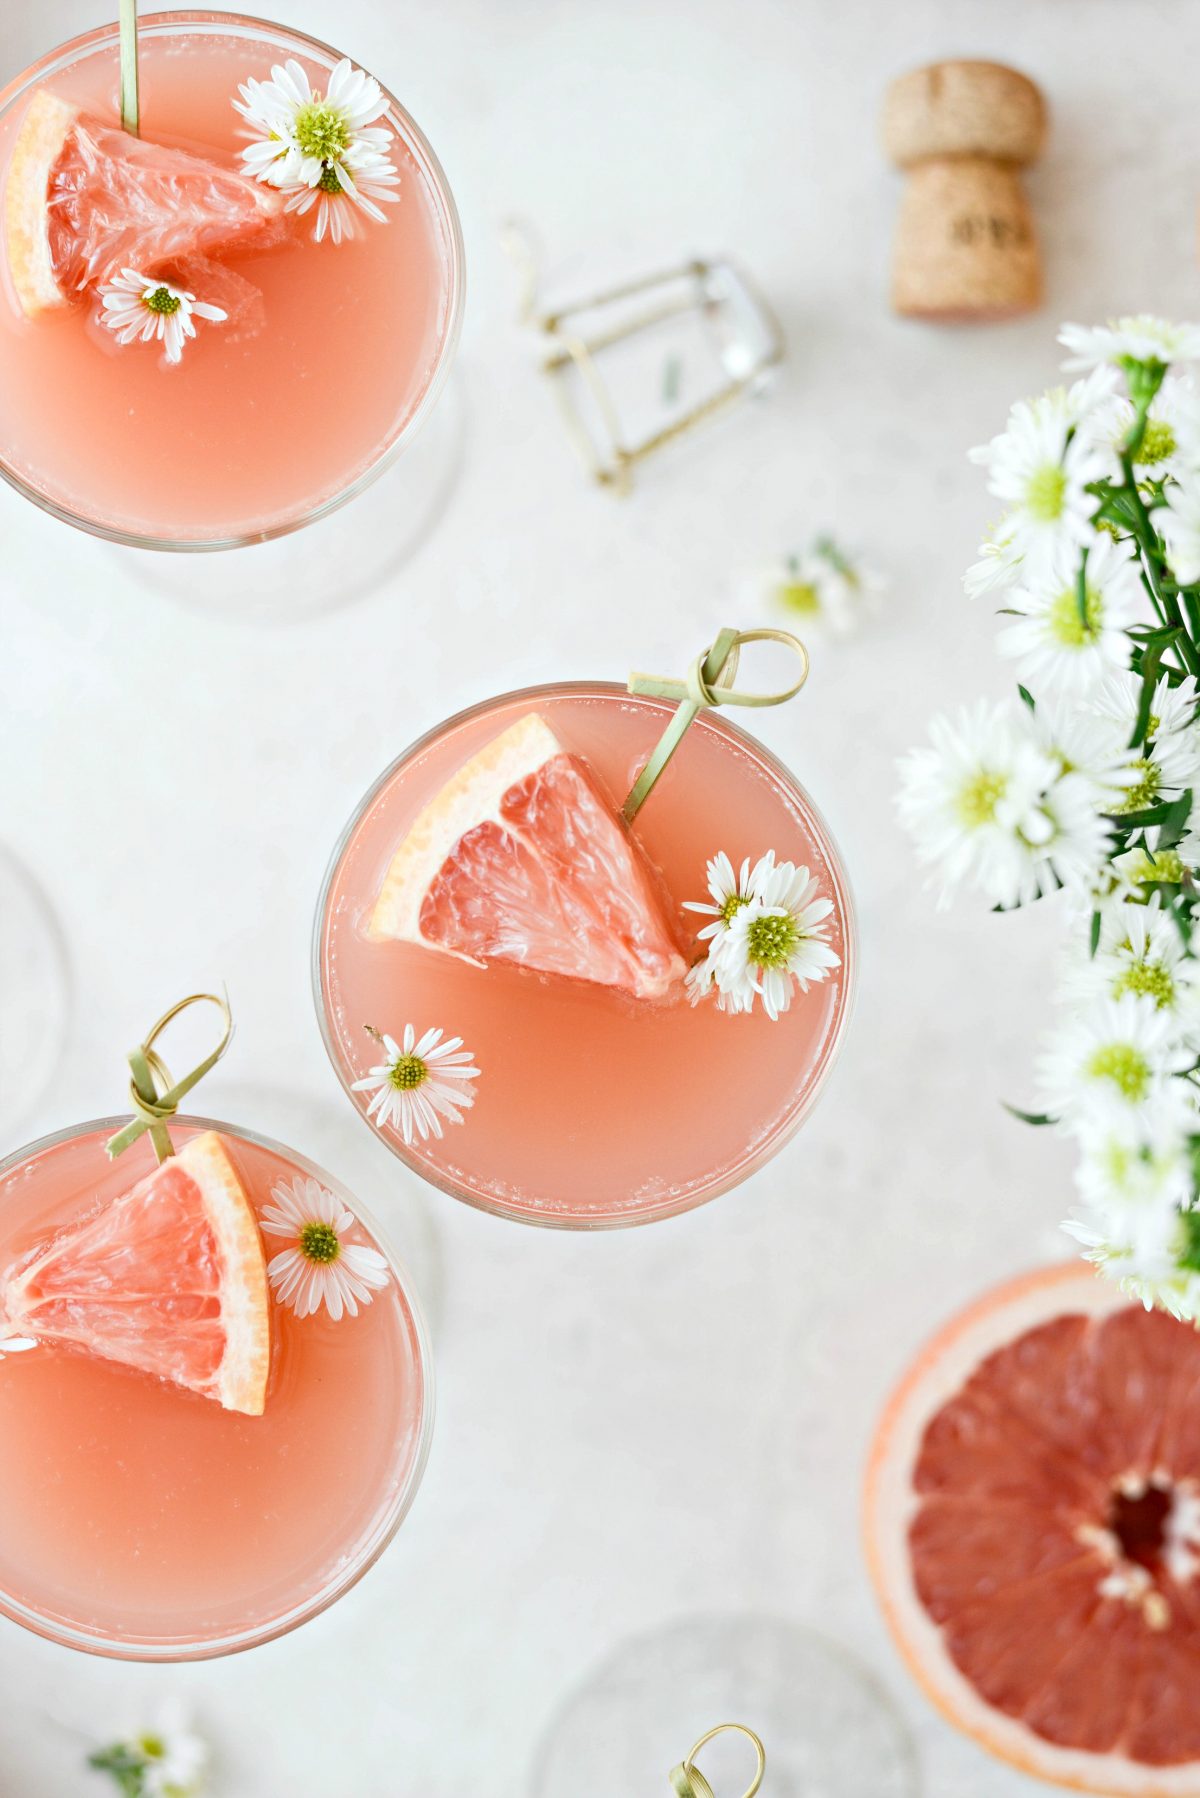 greippi Rosé Mimosas l SimplyScratch.com #adult #beverage #greippi #rose #mimosa #easter #brunch #mothersday